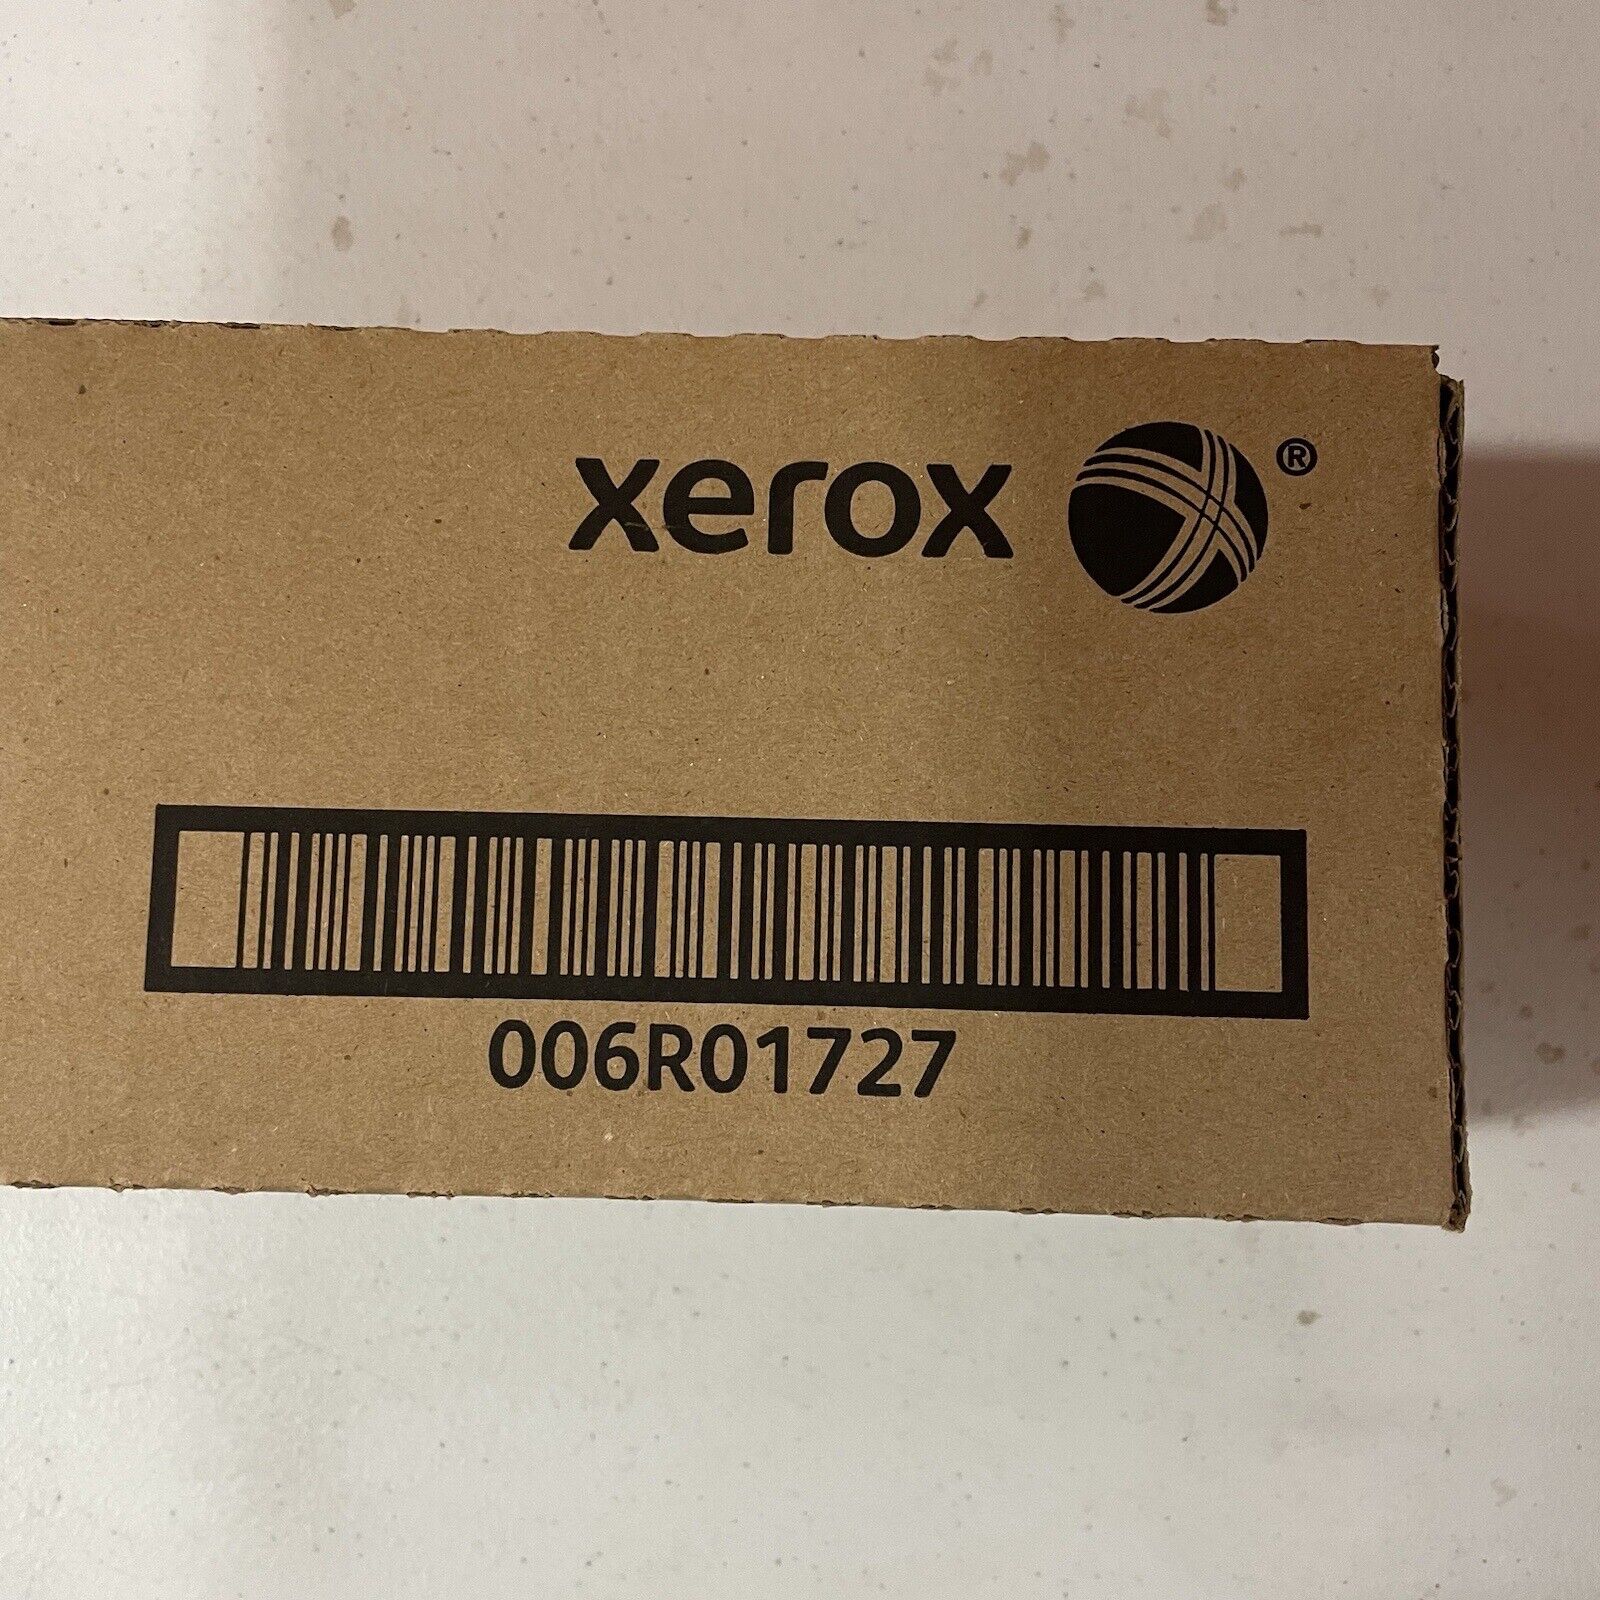 Xerox 006R01727 Toner Cartridge For WorkCentre, CopyCentre, Document Centre 